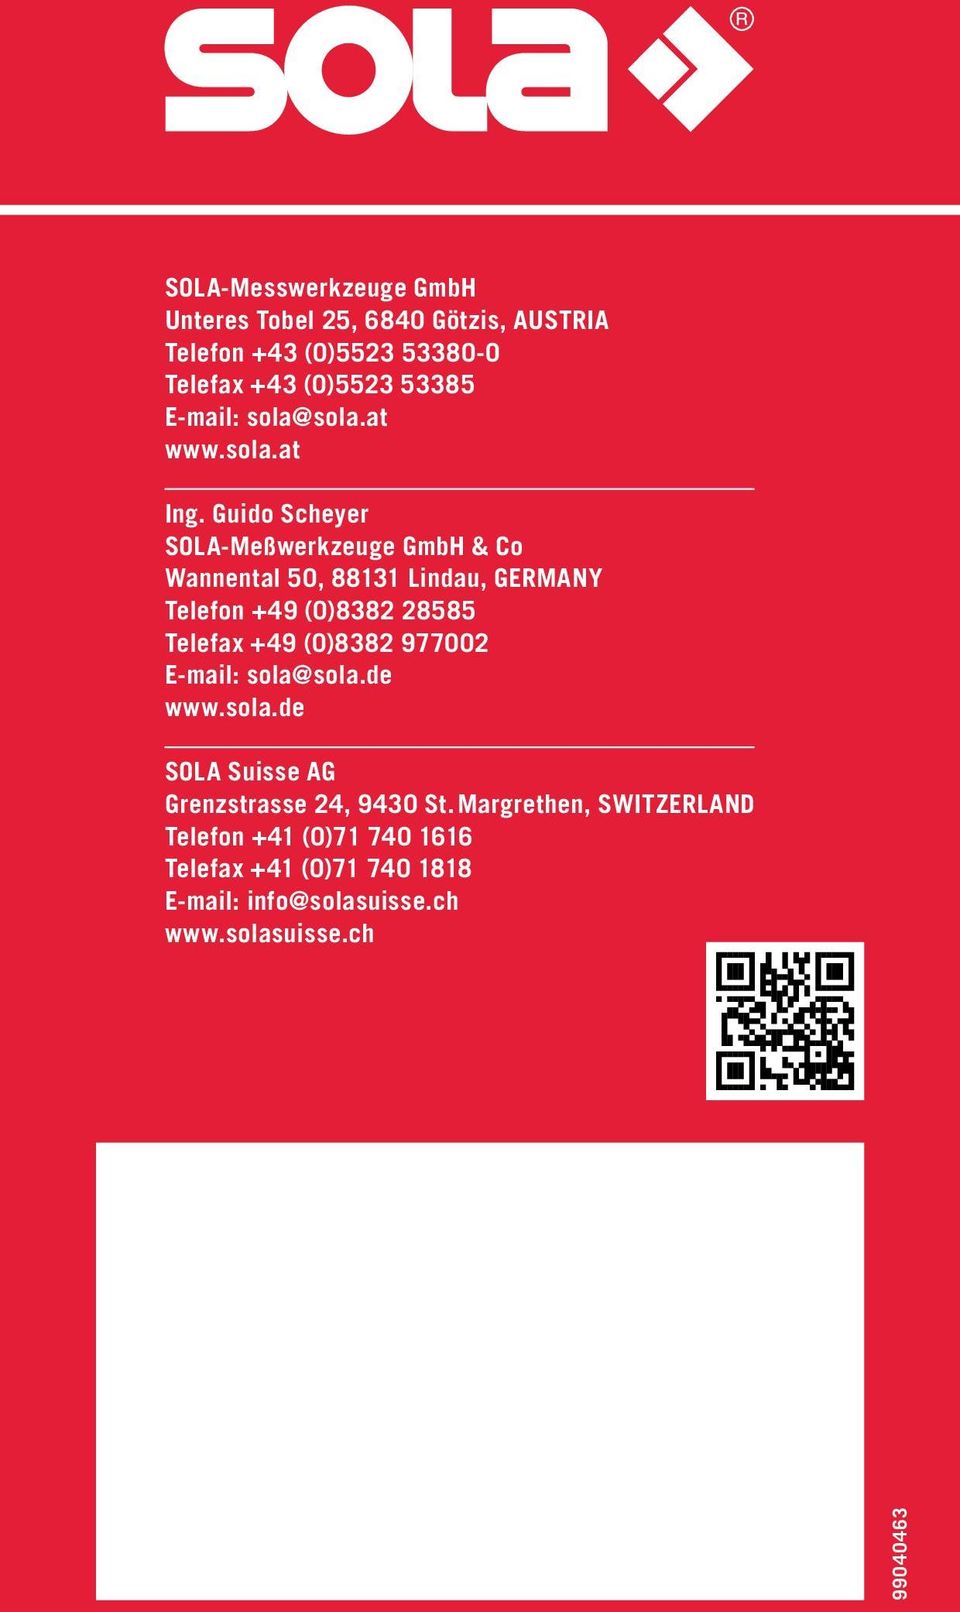 Guido Scheyer SOLA-Meßwerkzeuge GmbH & Co Wannental 50, 88131 Lindau, GERMANY Telefon +49 (0)8382 28585 Telefax +49